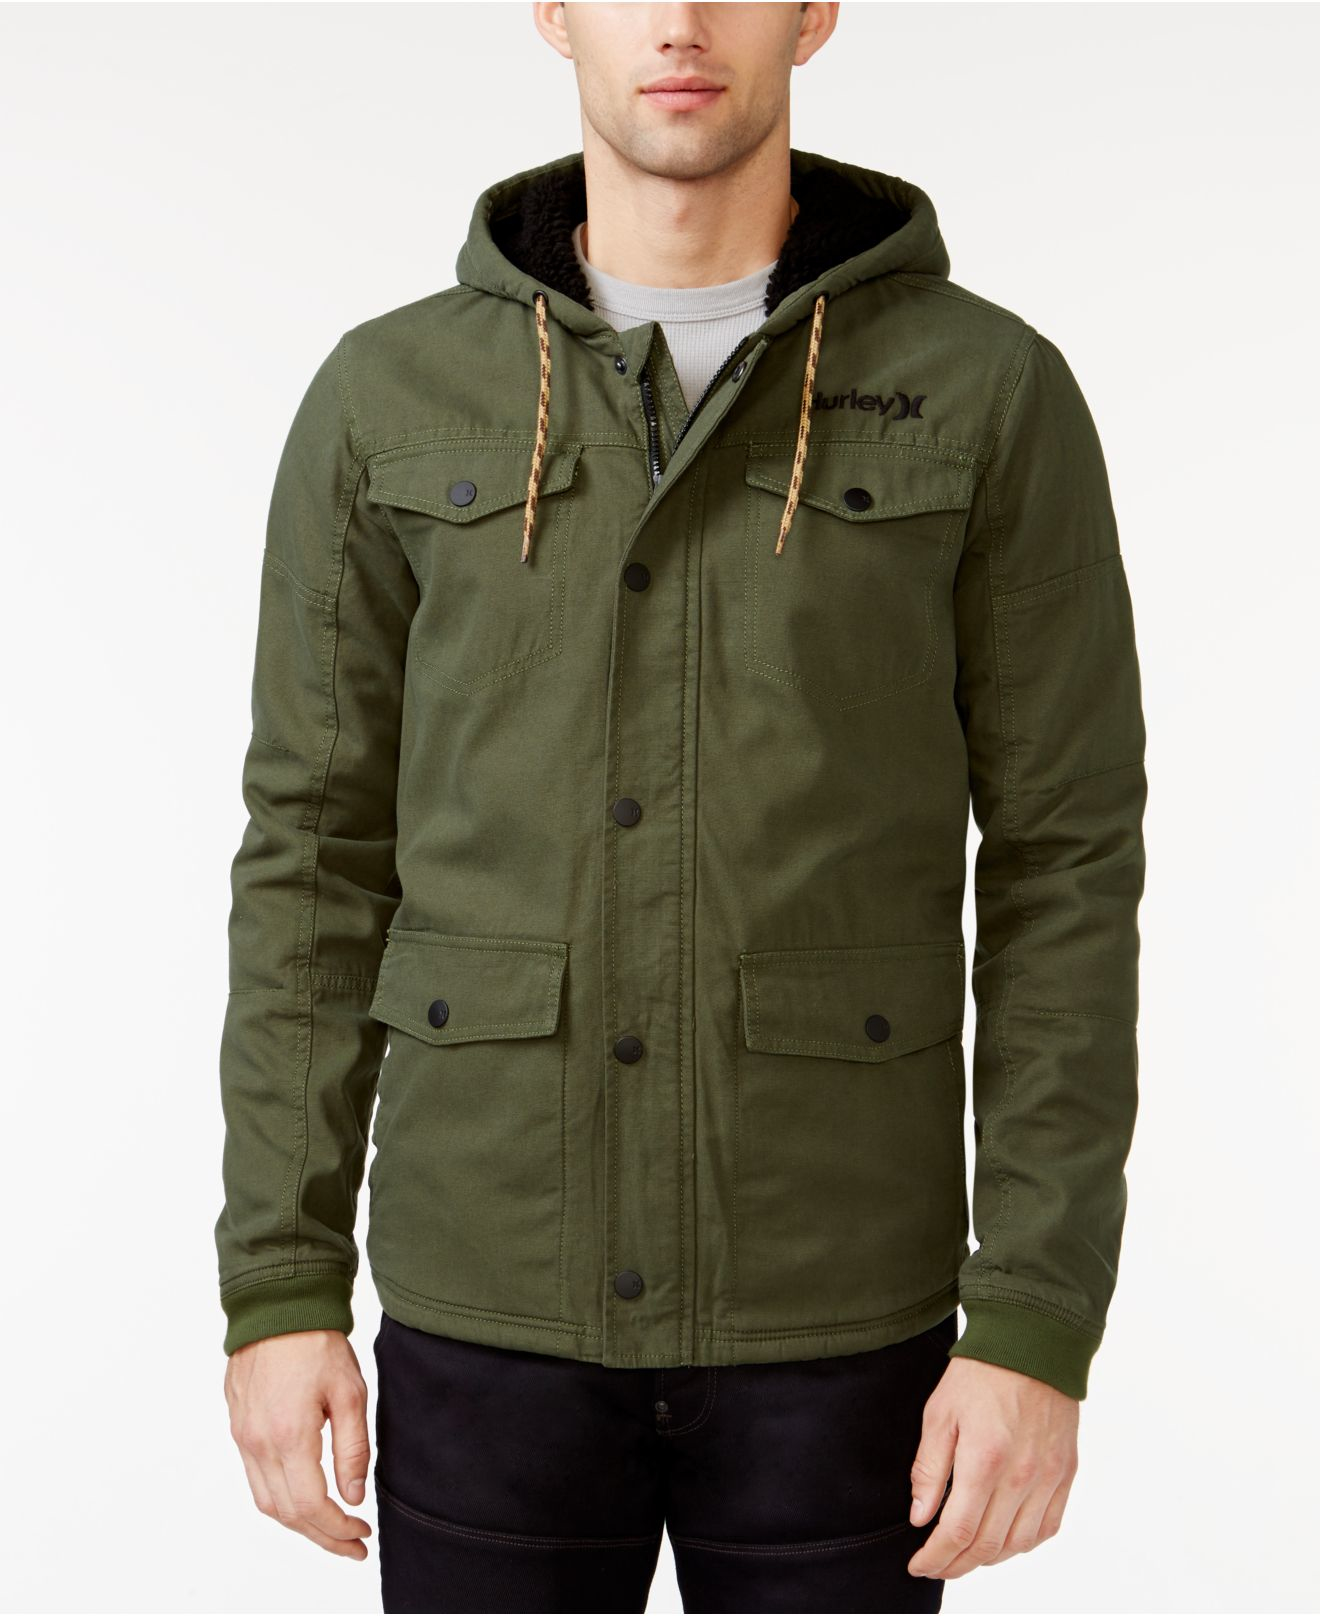 Lyst - Hurley Belesky Faux-sherpa Lined Jacket in Green for Men